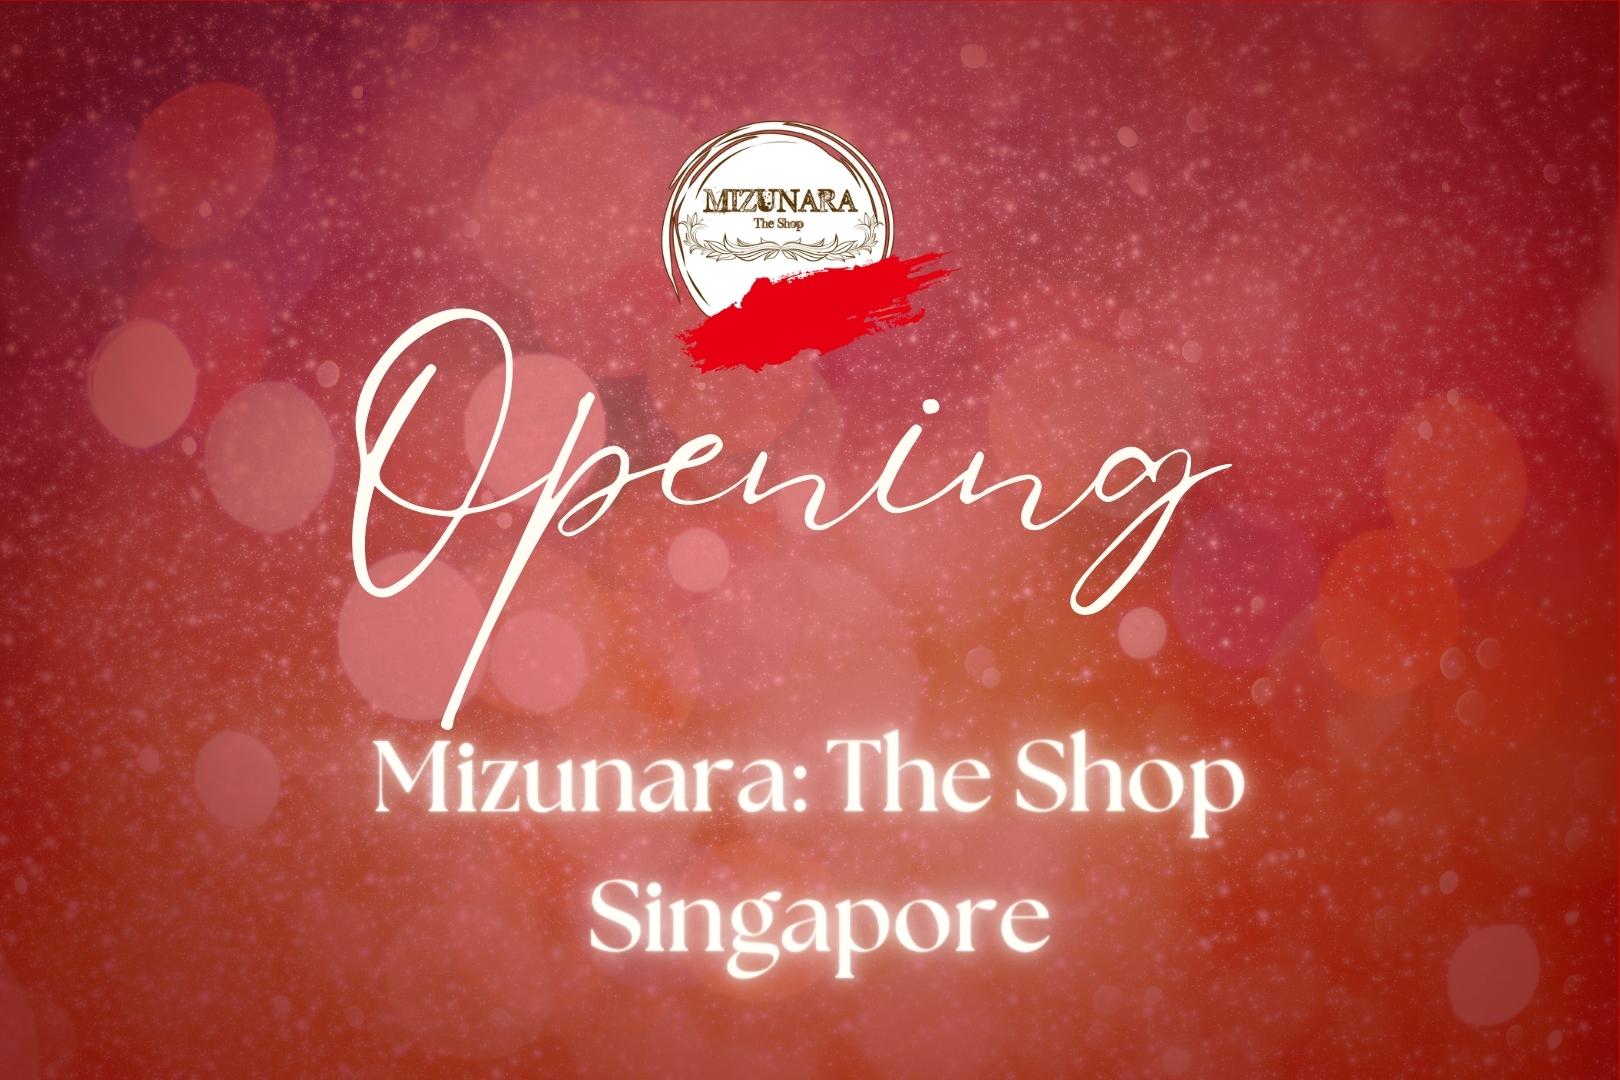 Mizunara: The Shop Opens in Singapore